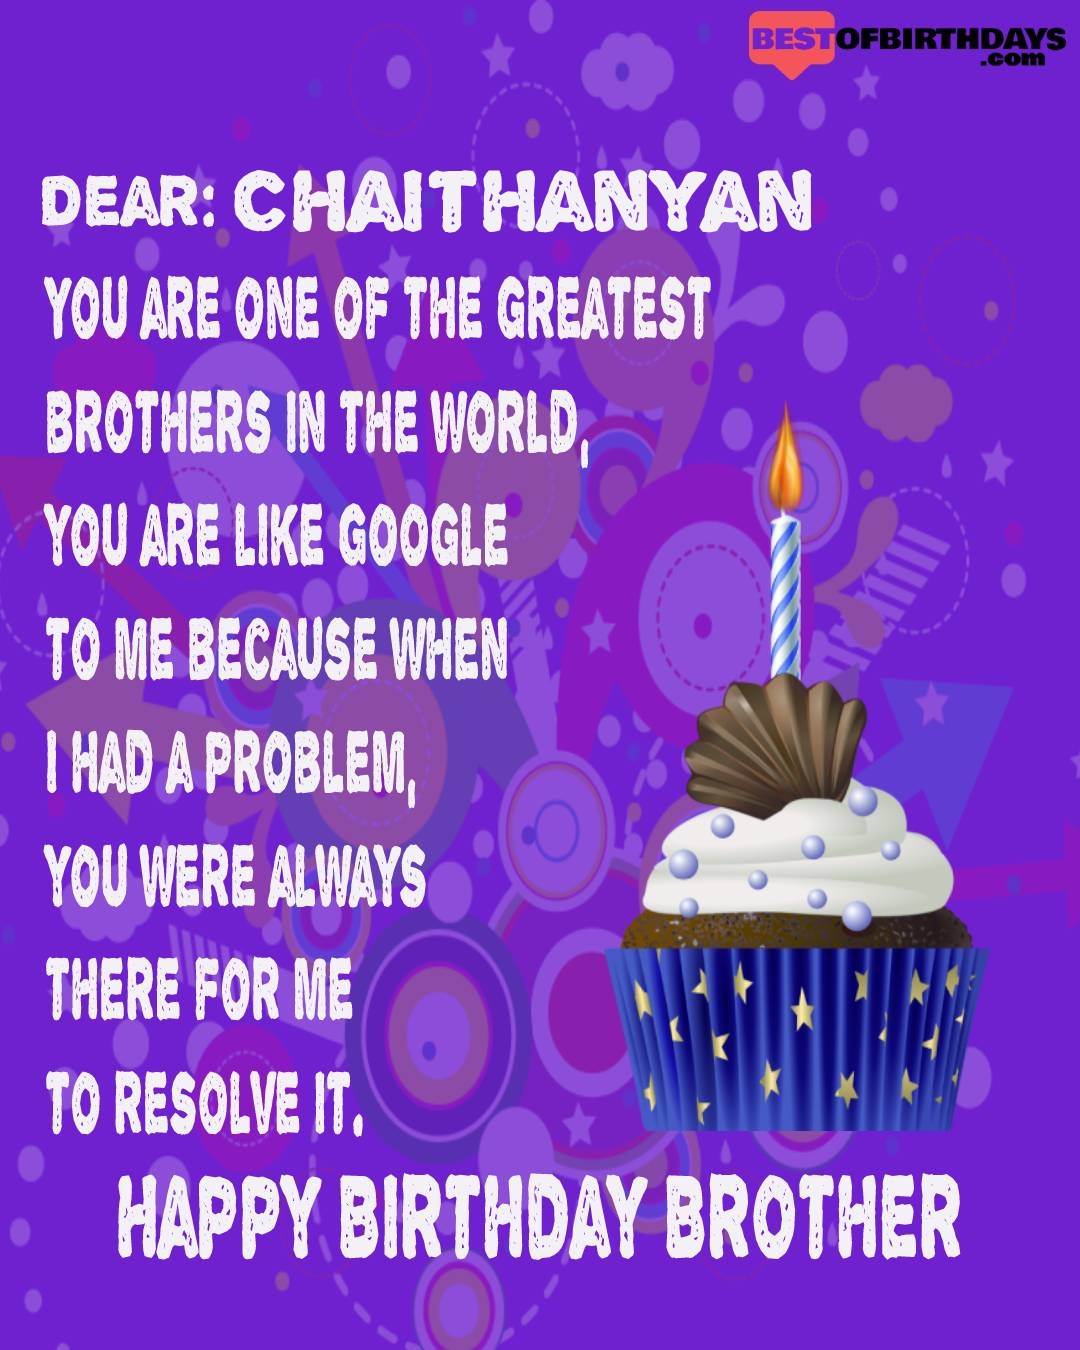 Happy birthday chaithanyan bhai brother bro